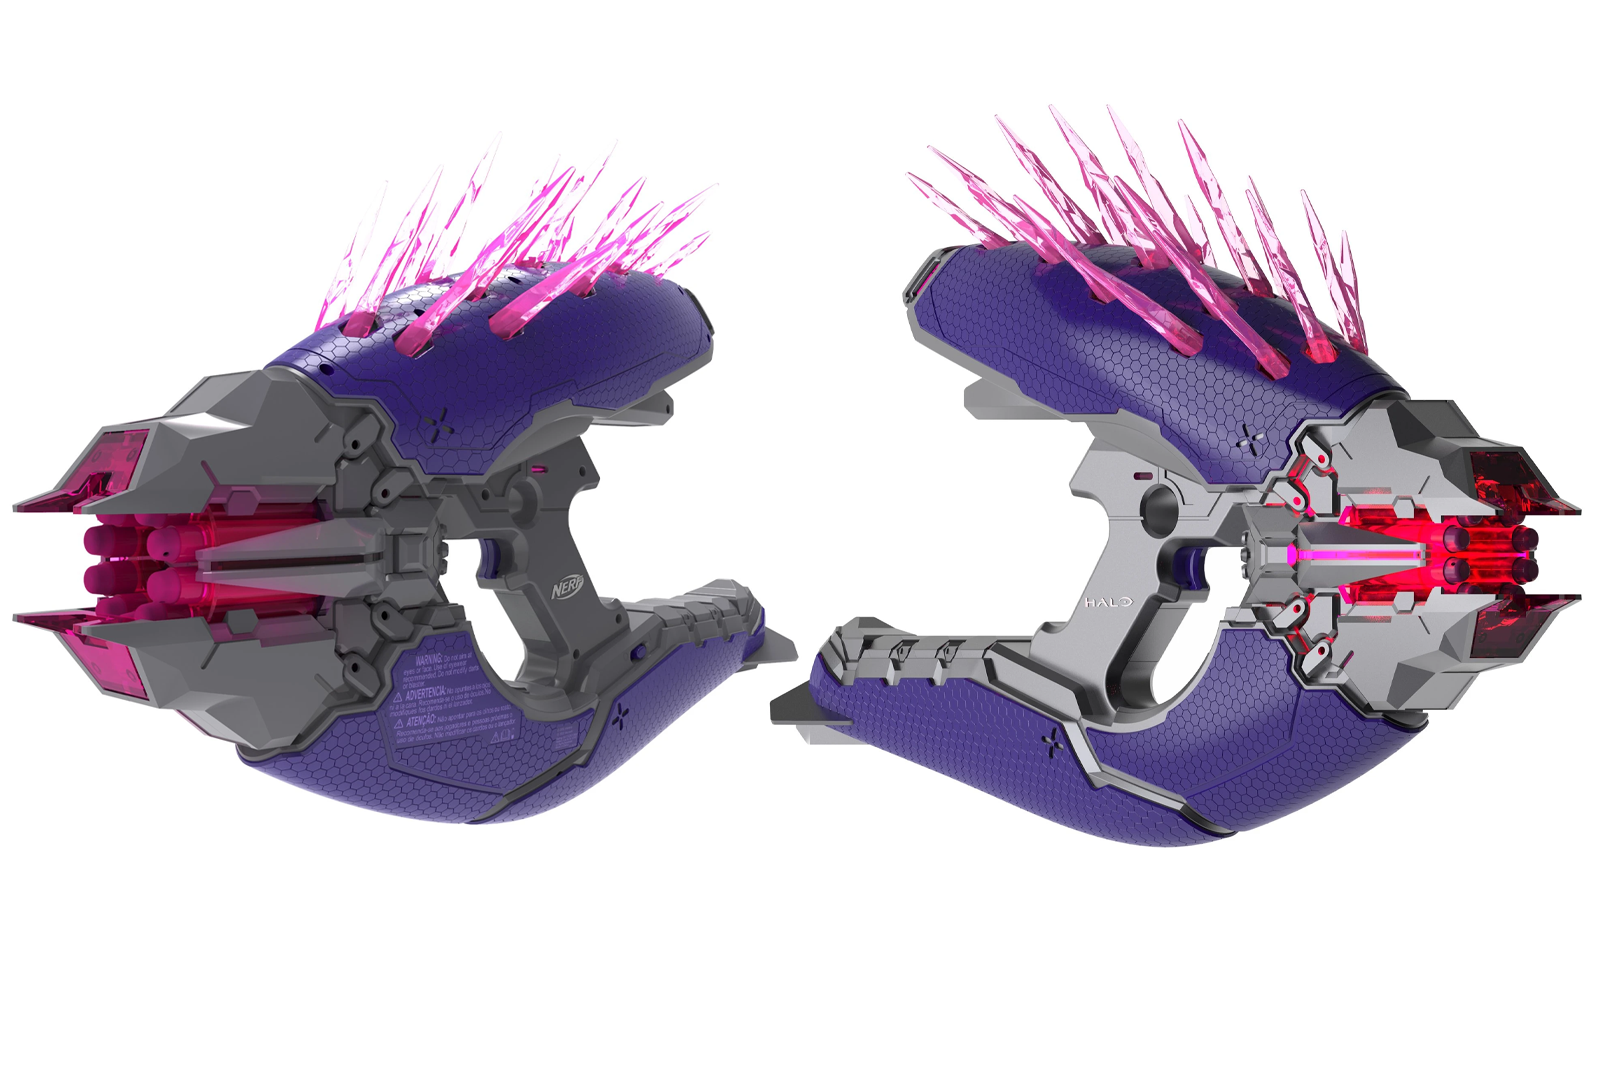 Nerf Halo Blaster Needler Replica Silver